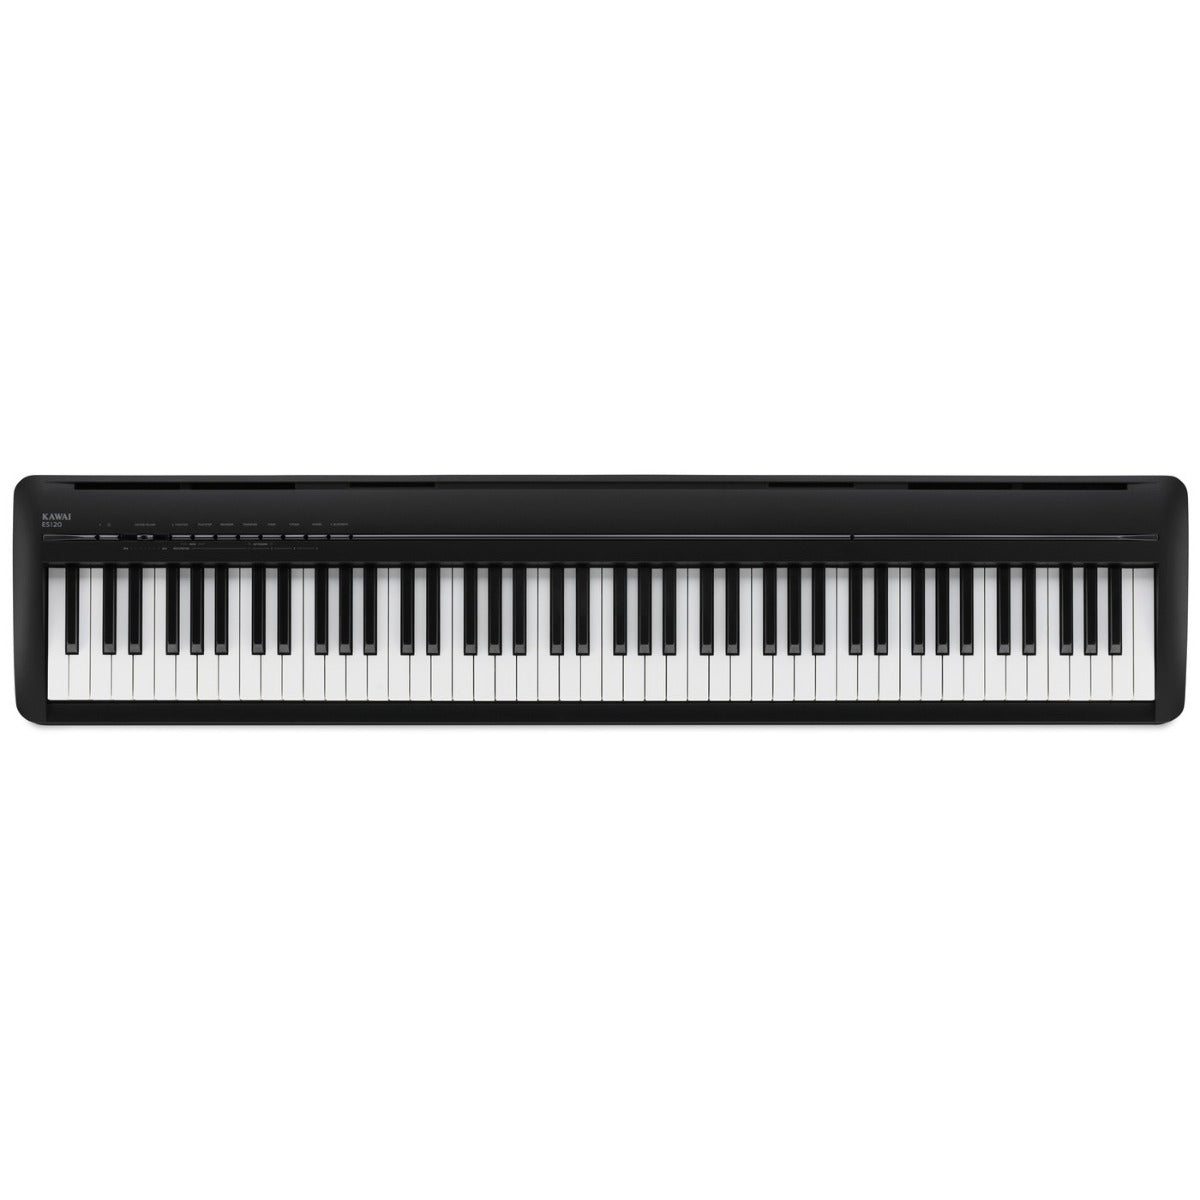 Kawai ES120 Portable Digital Piano - Black, View 1